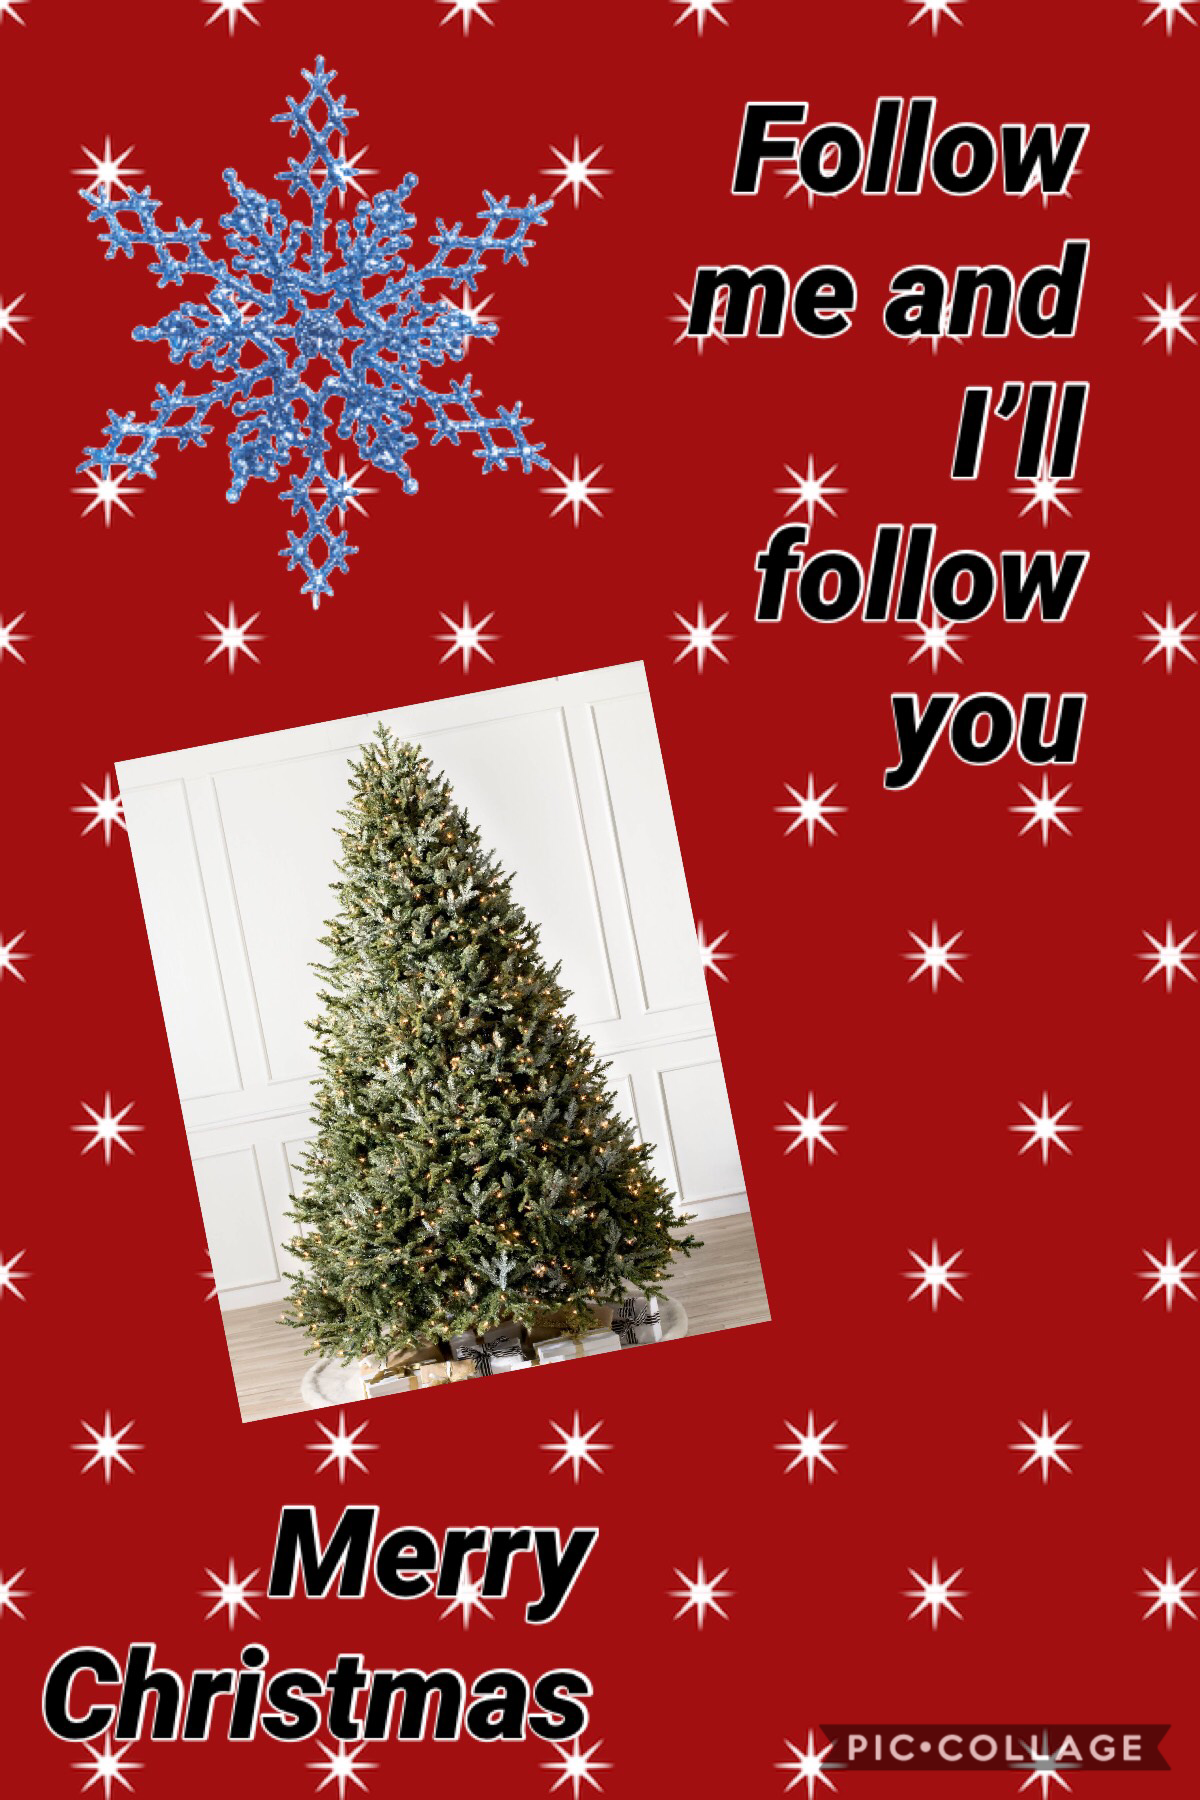 Follow me merry Christmas 